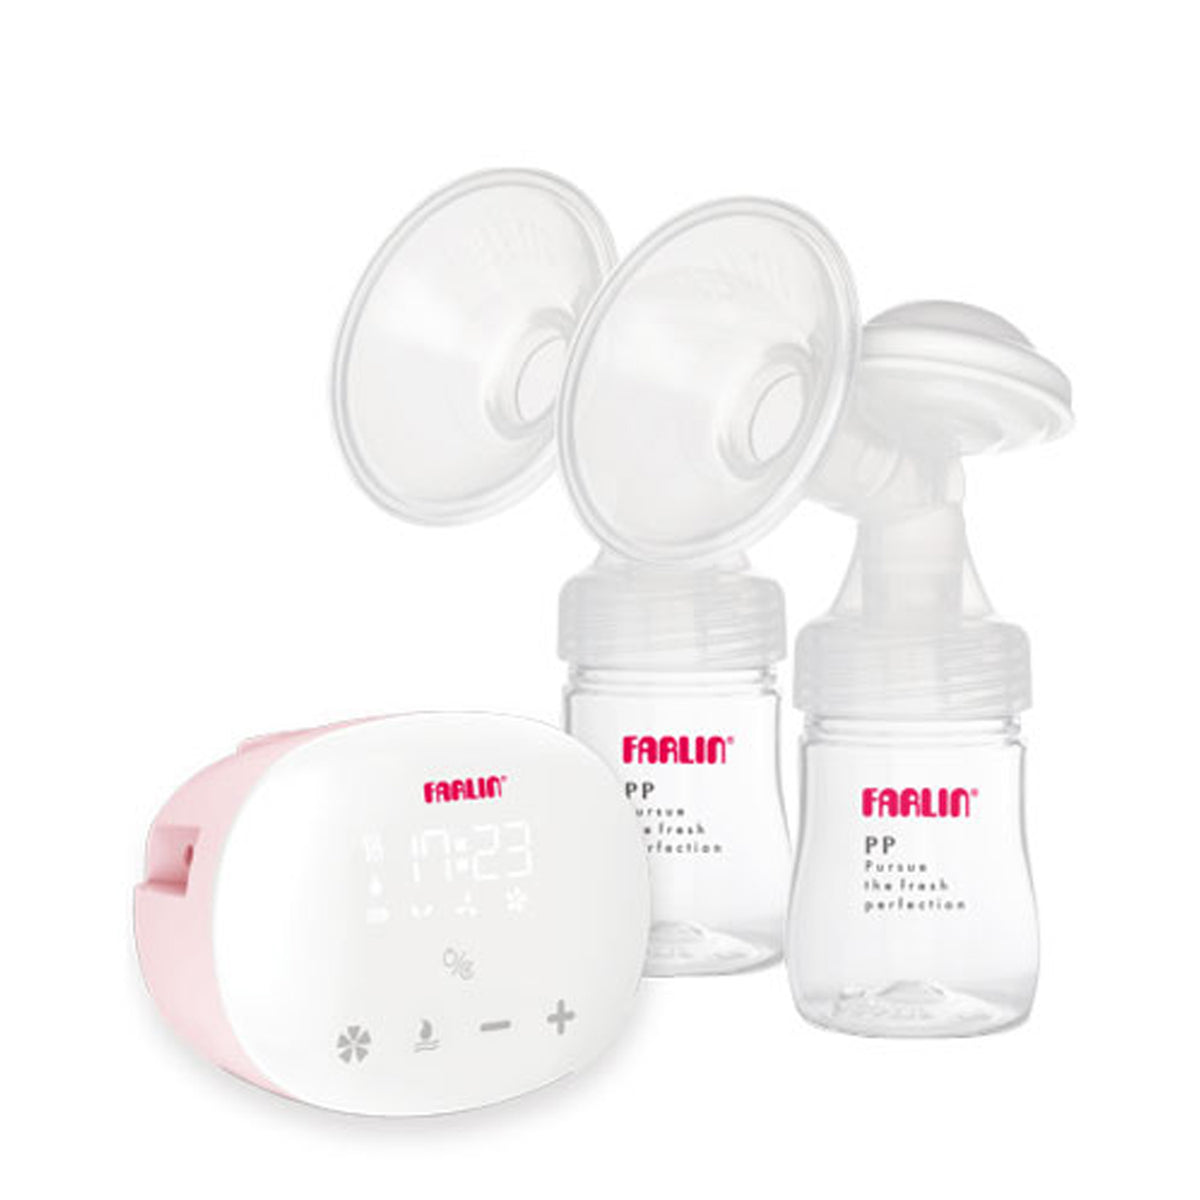 Farlin Ele-Electric Double Breast Pump